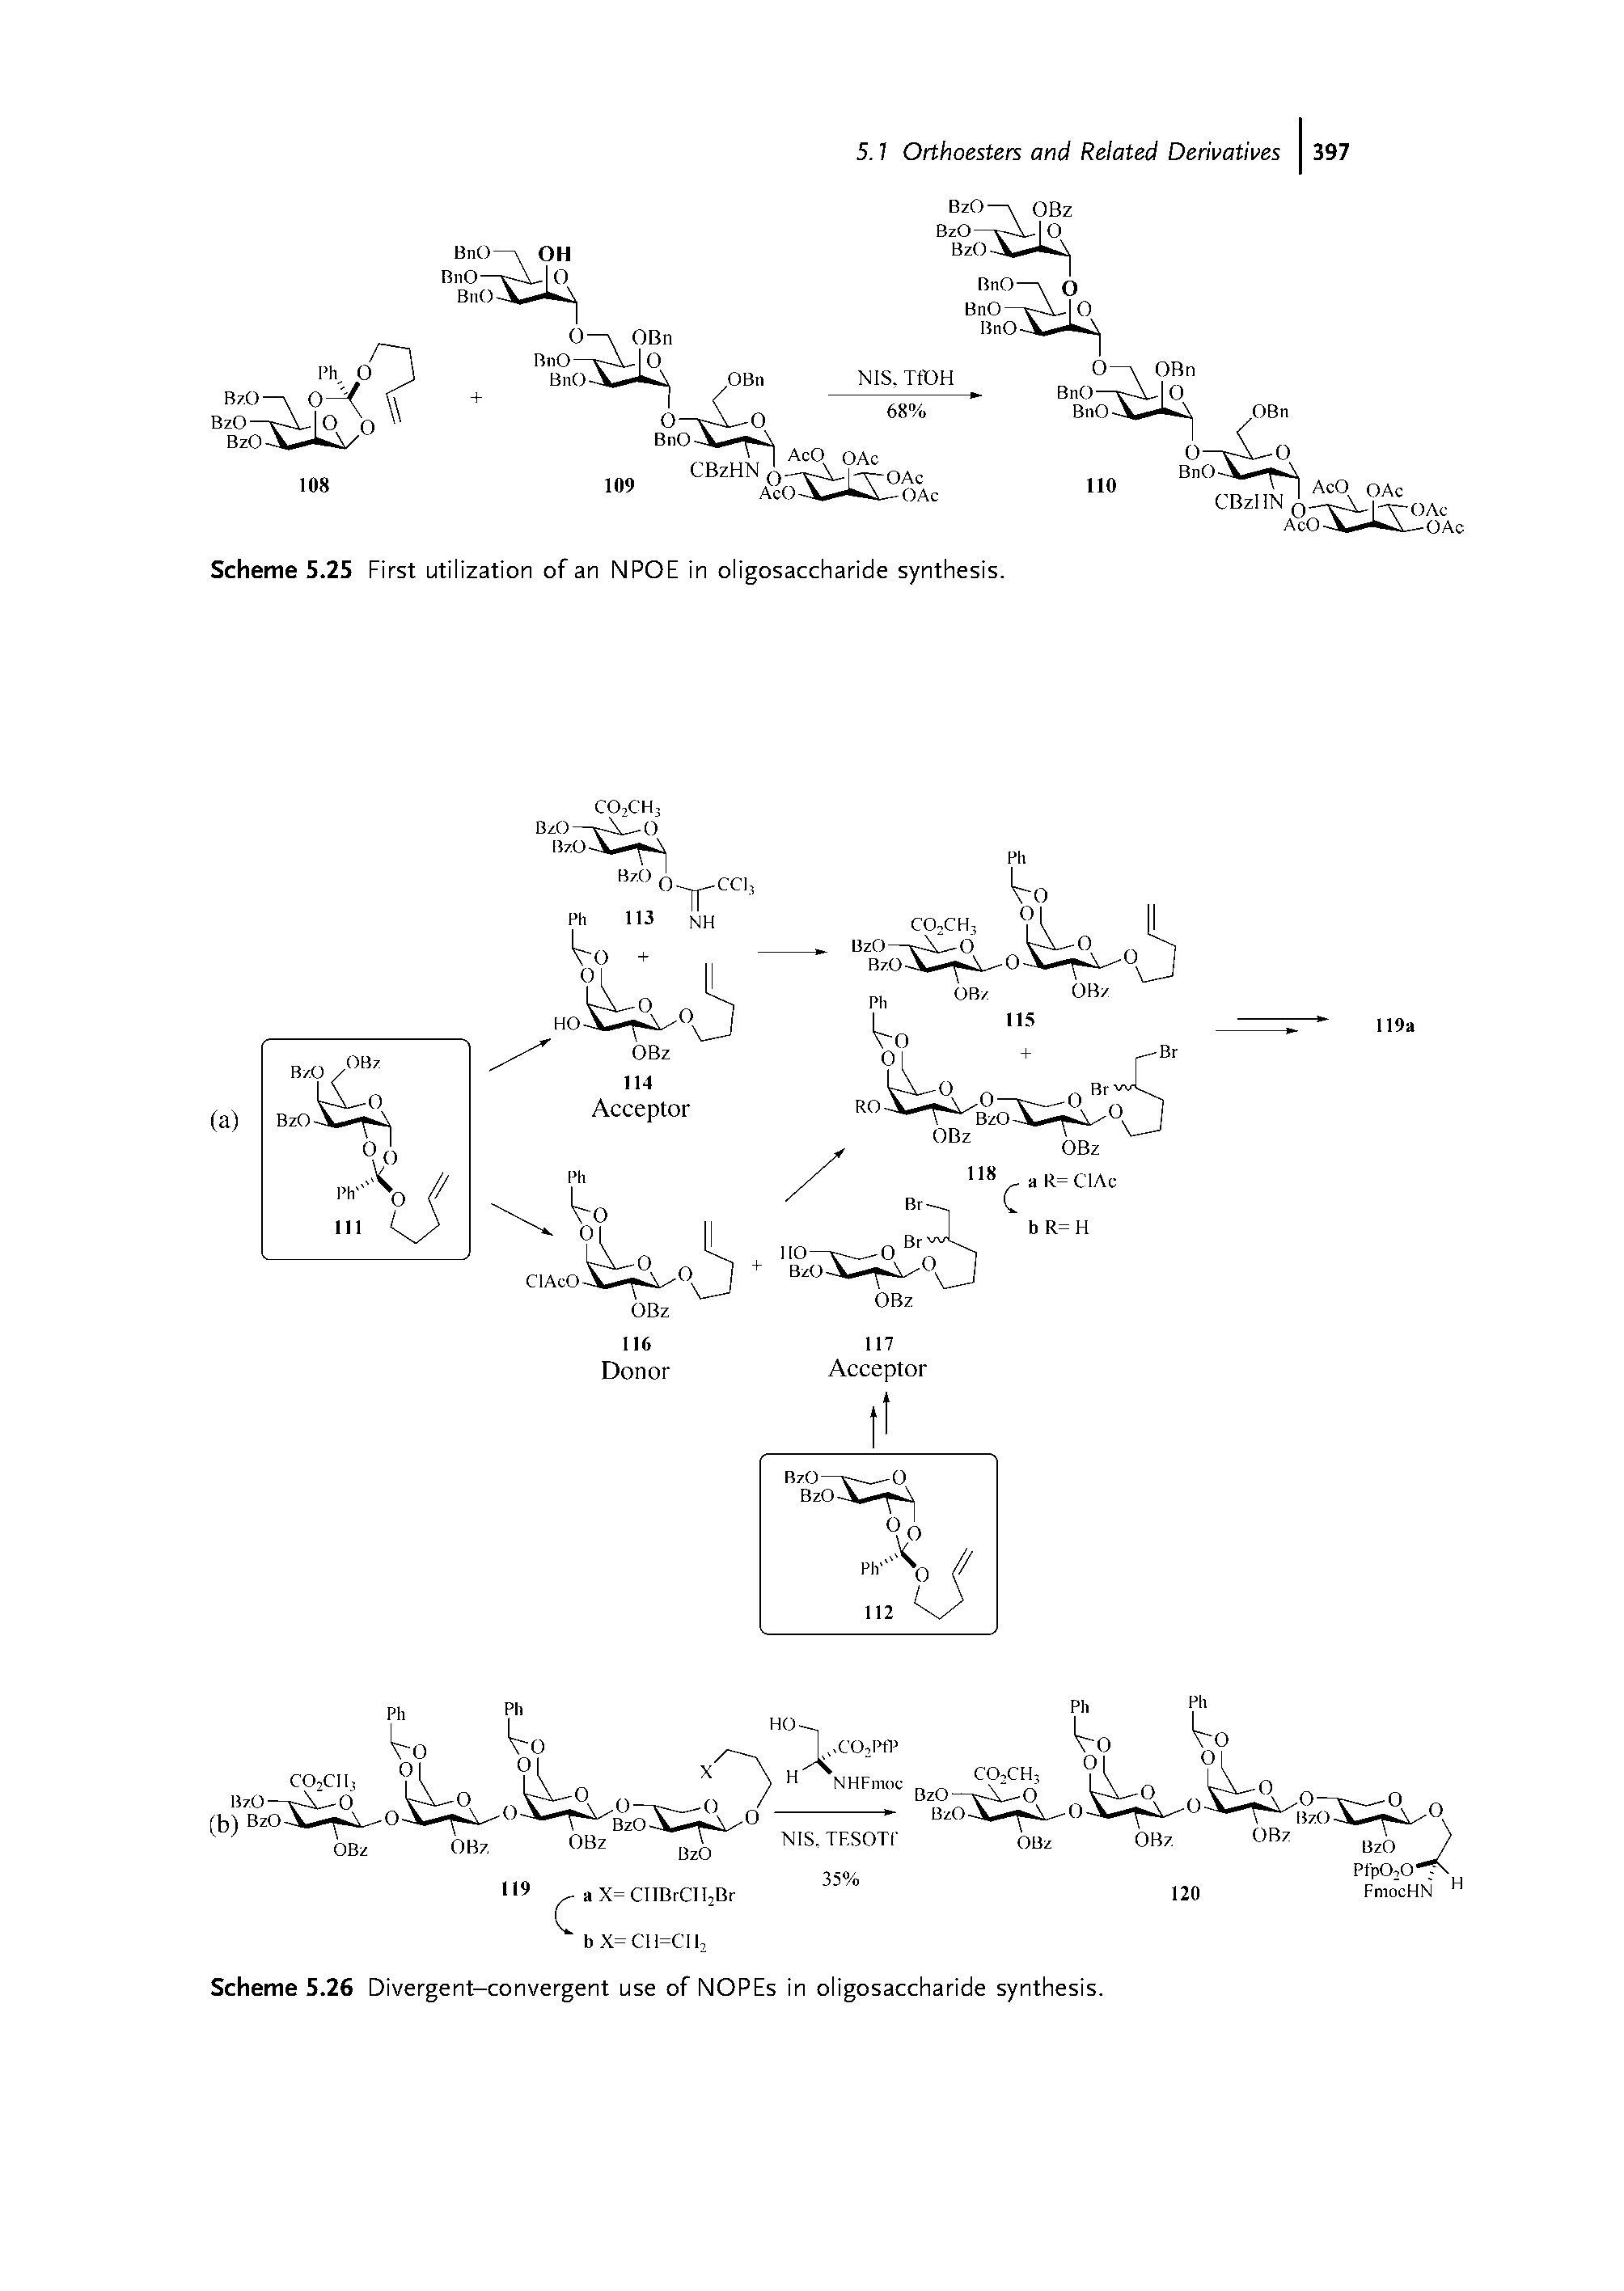 Scheme 5.25 First utilization of an NPOE in oligosaccharide synthesis.